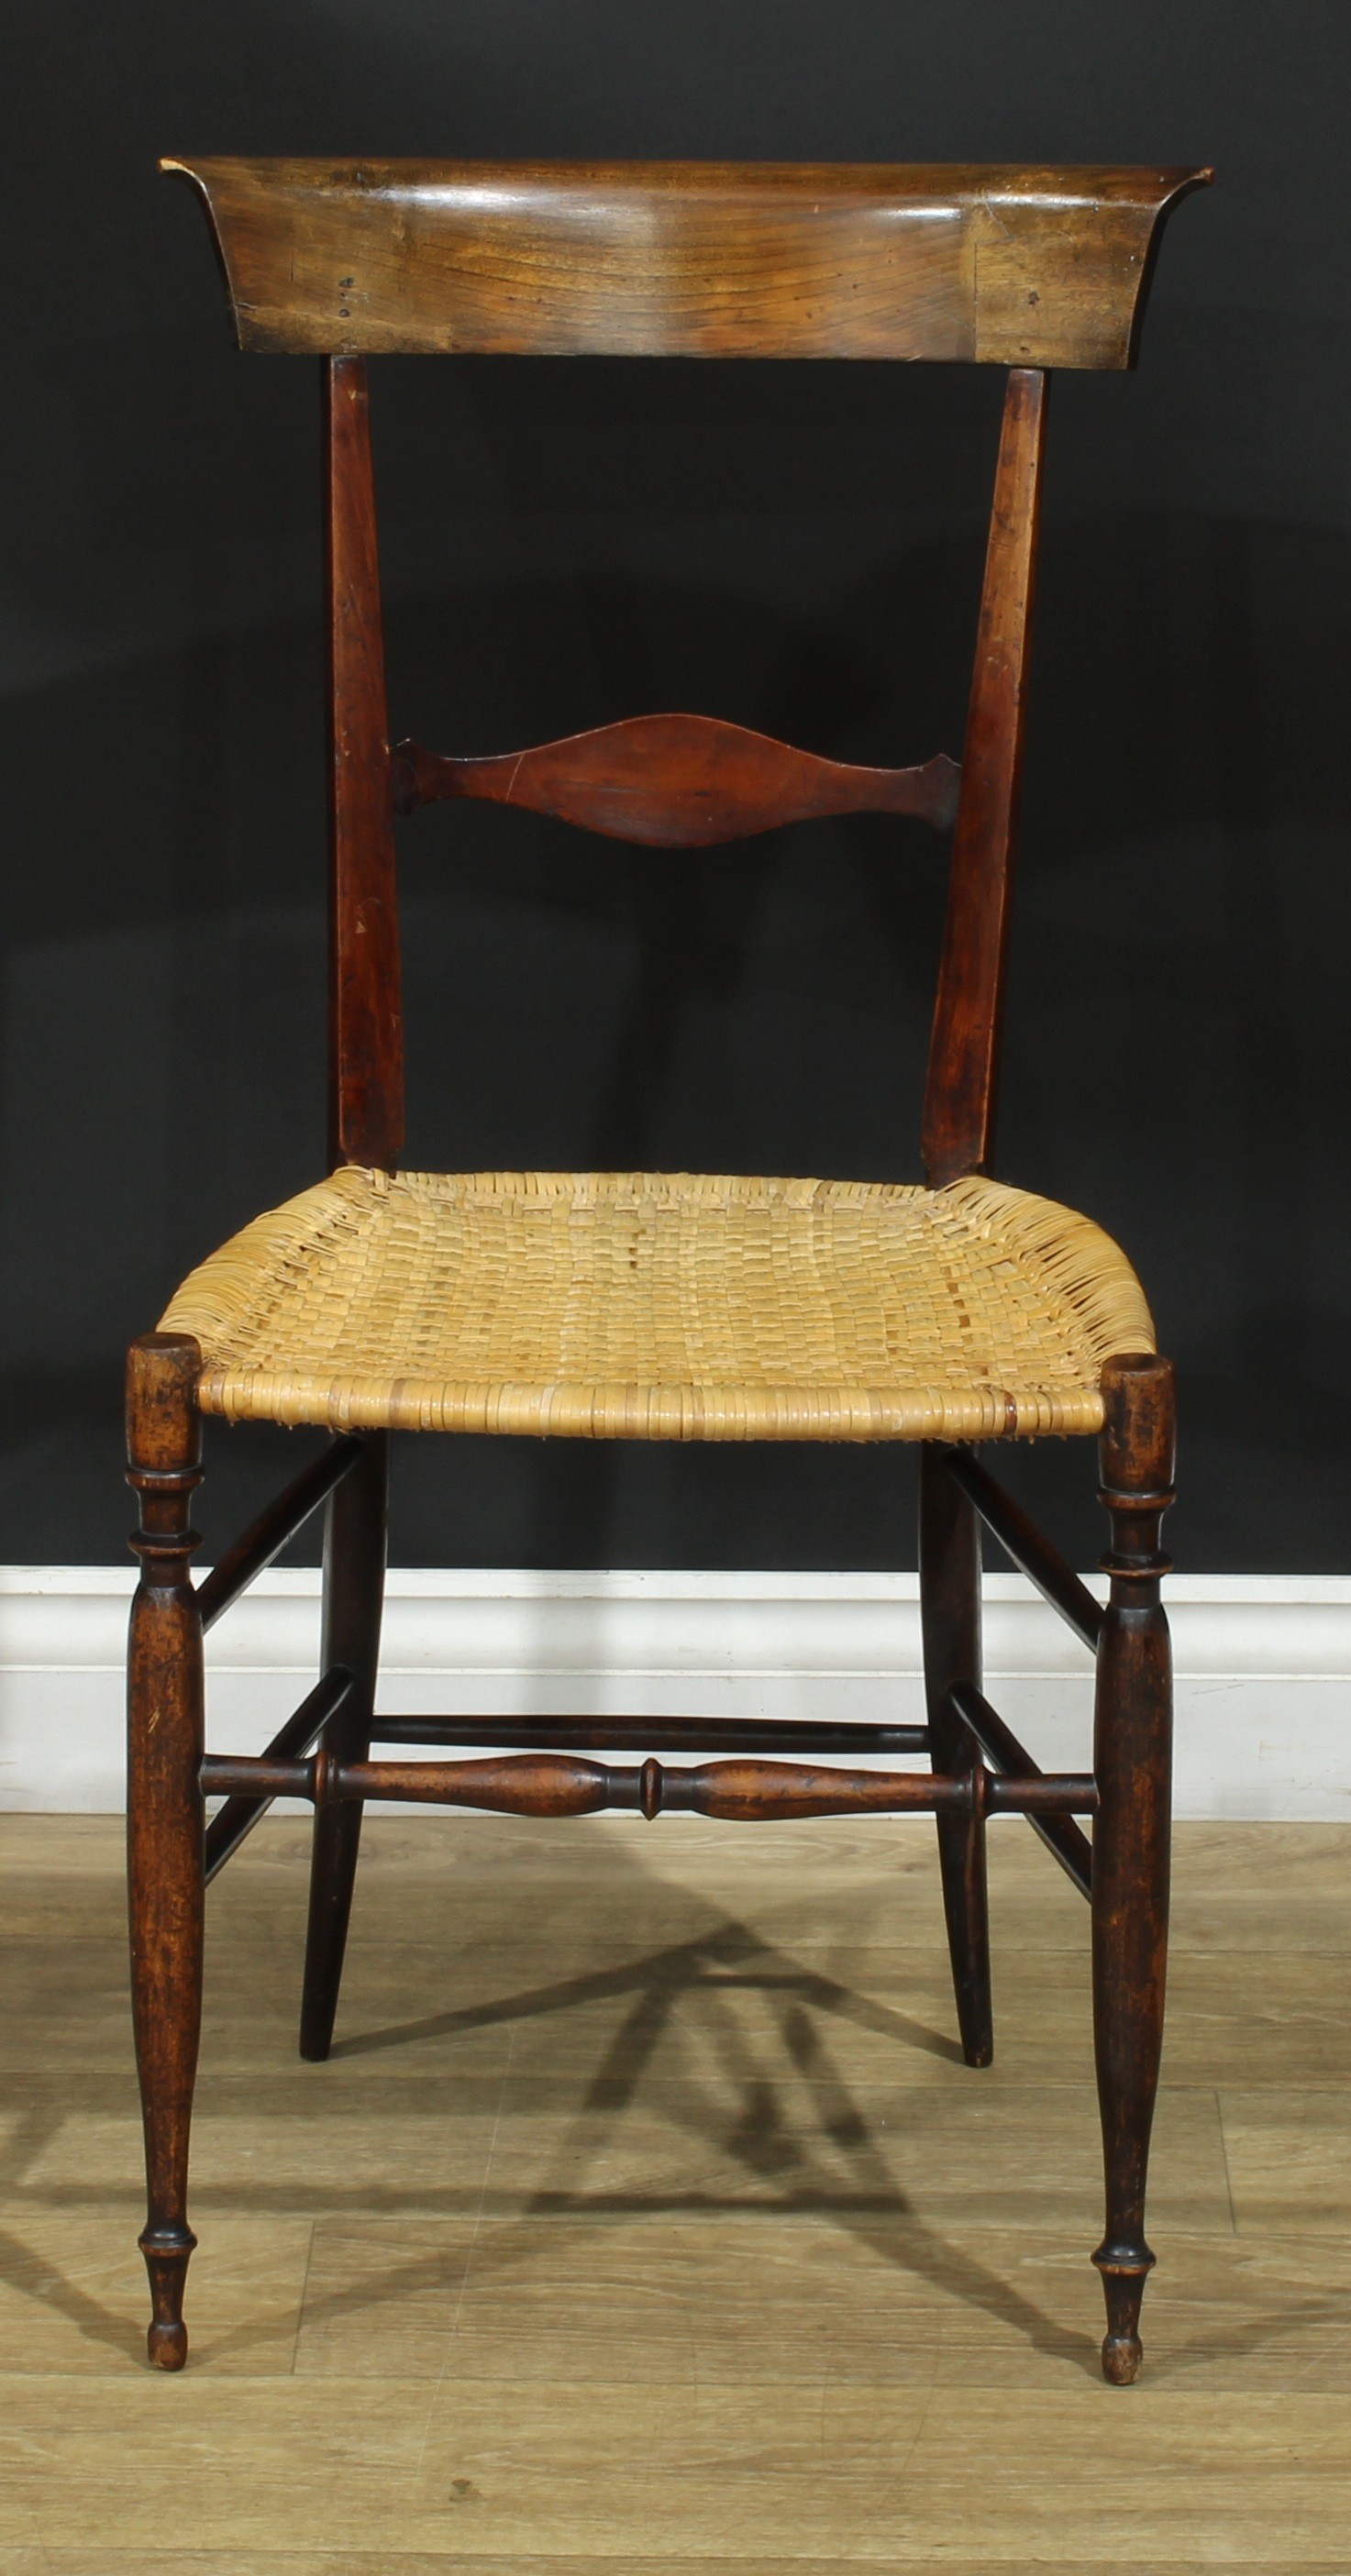 A 19th century Italian cherry Chiavari chair, designed by Giovanni Battista Ravenna, woven cane